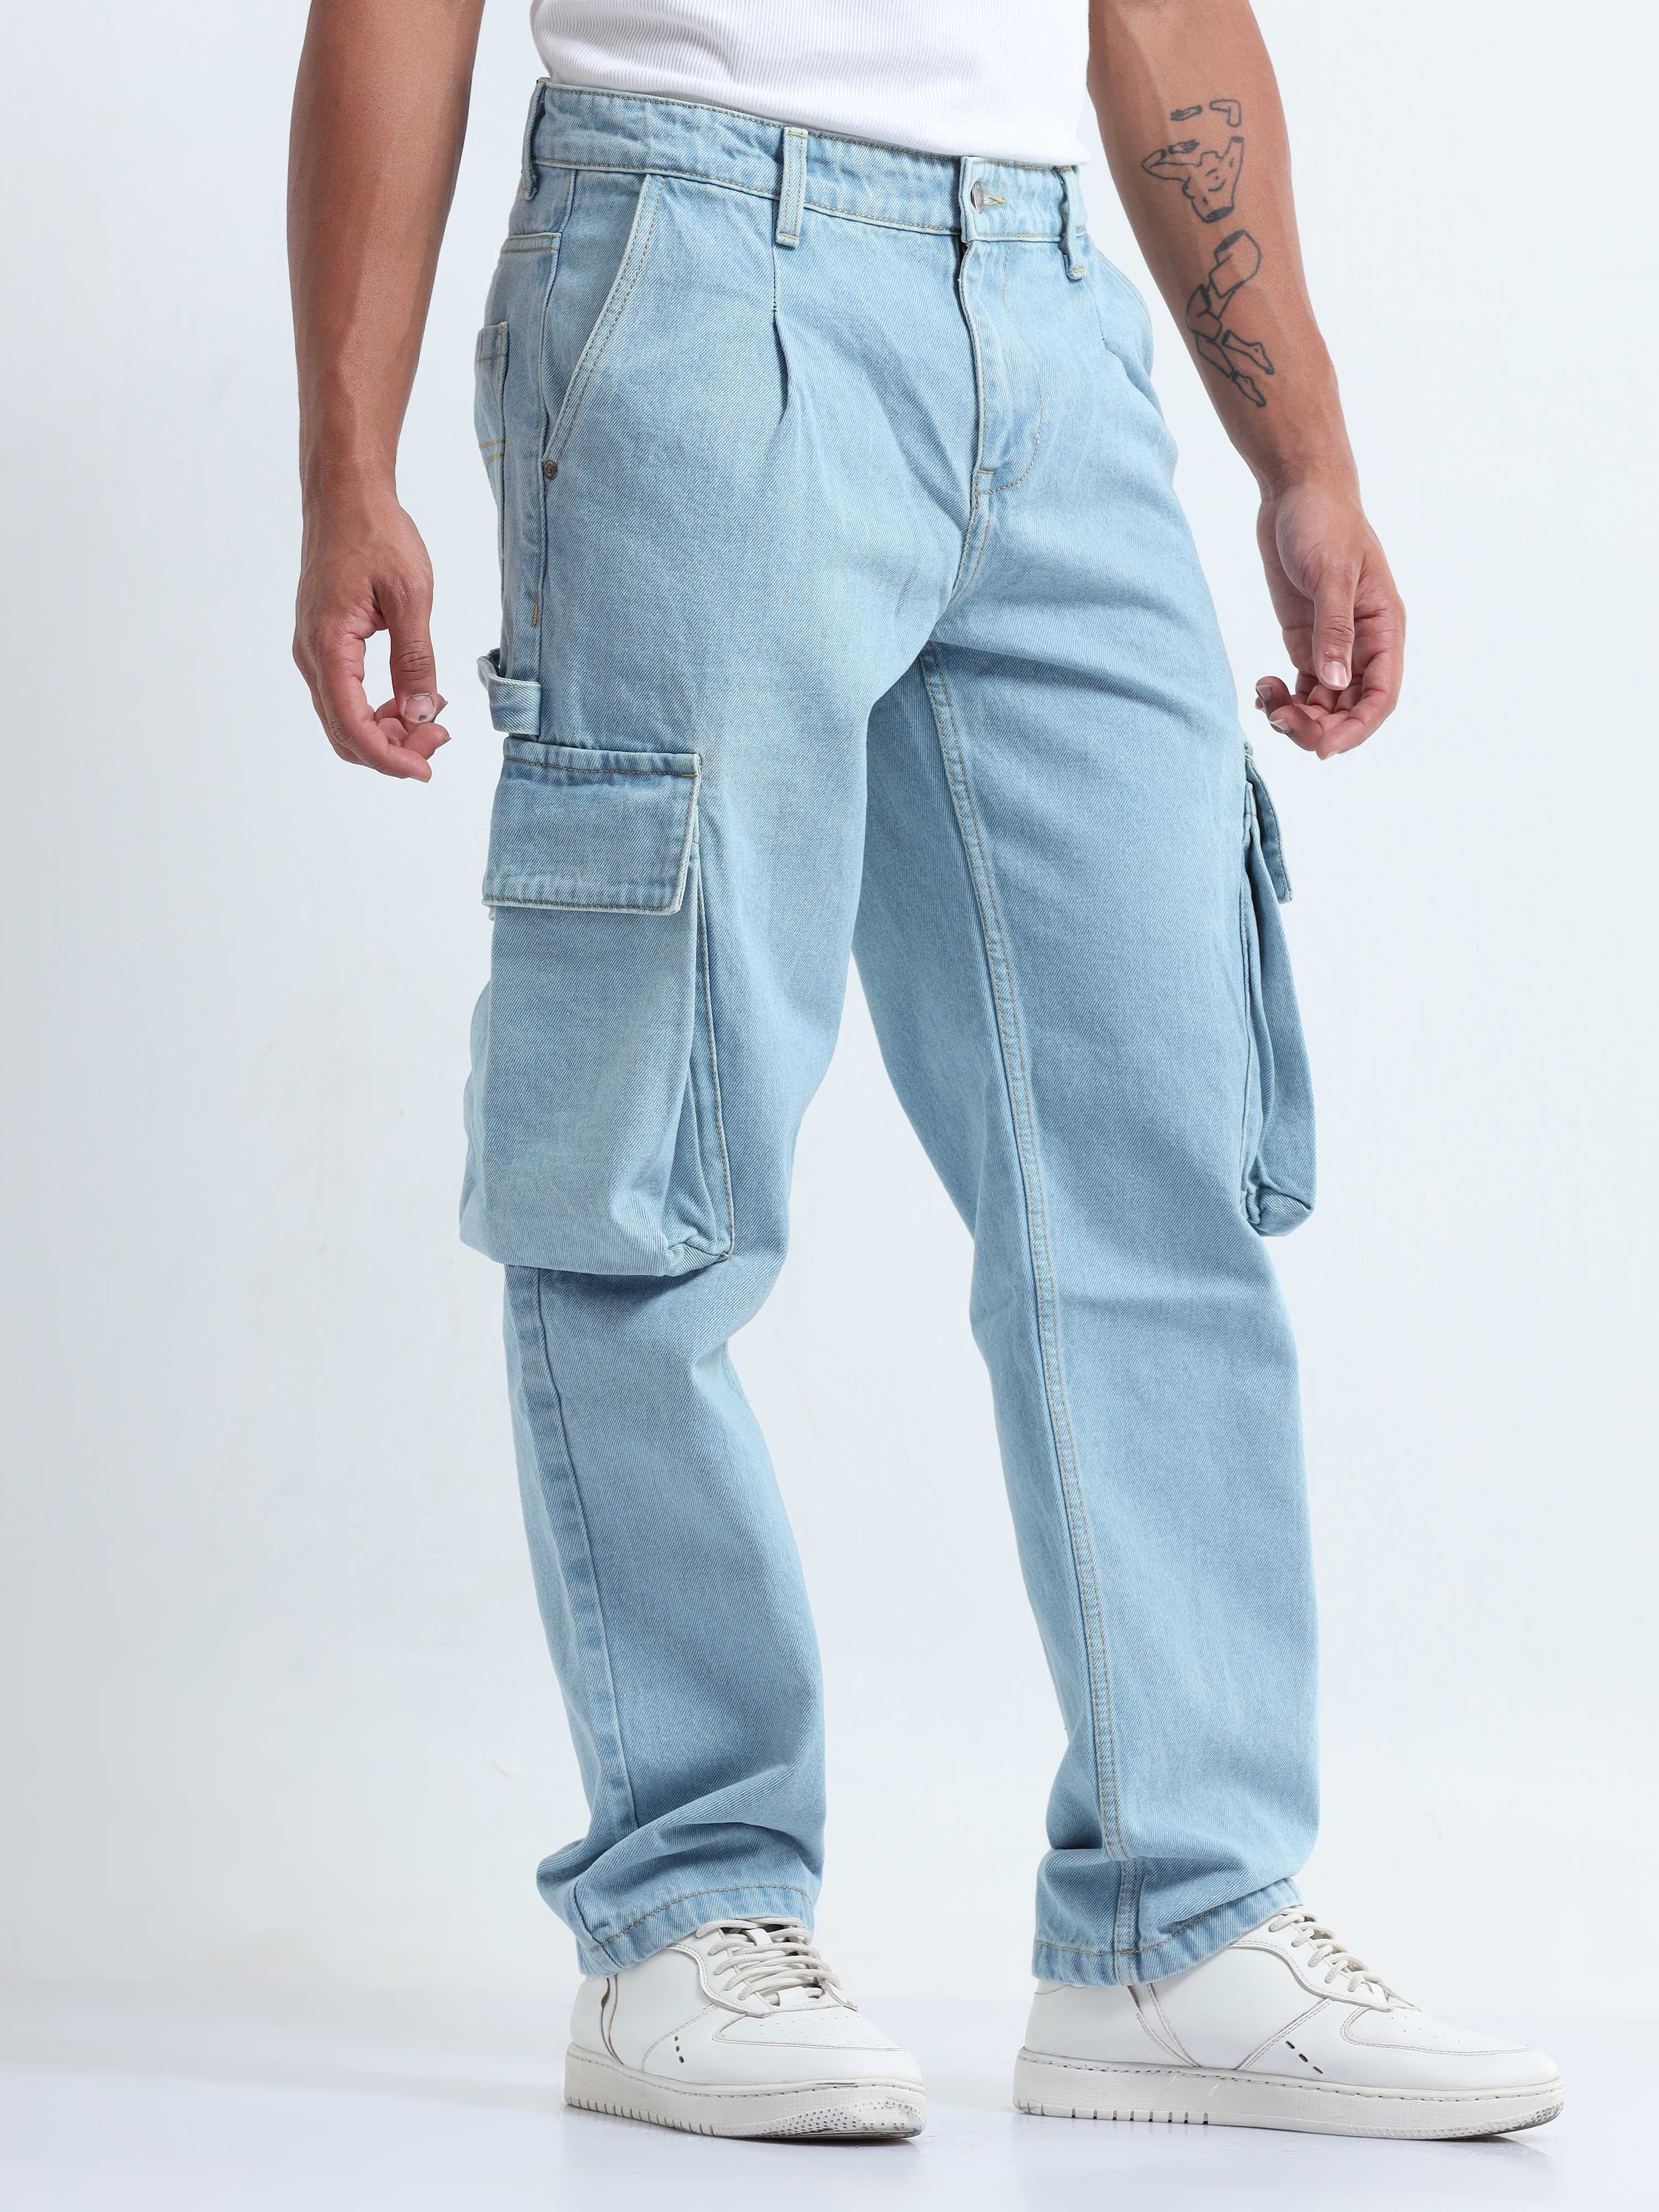 Men's Stretchable Denim Jeans Pants (Dark Blue_Medium) : Amazon.in:  Clothing & Accessories